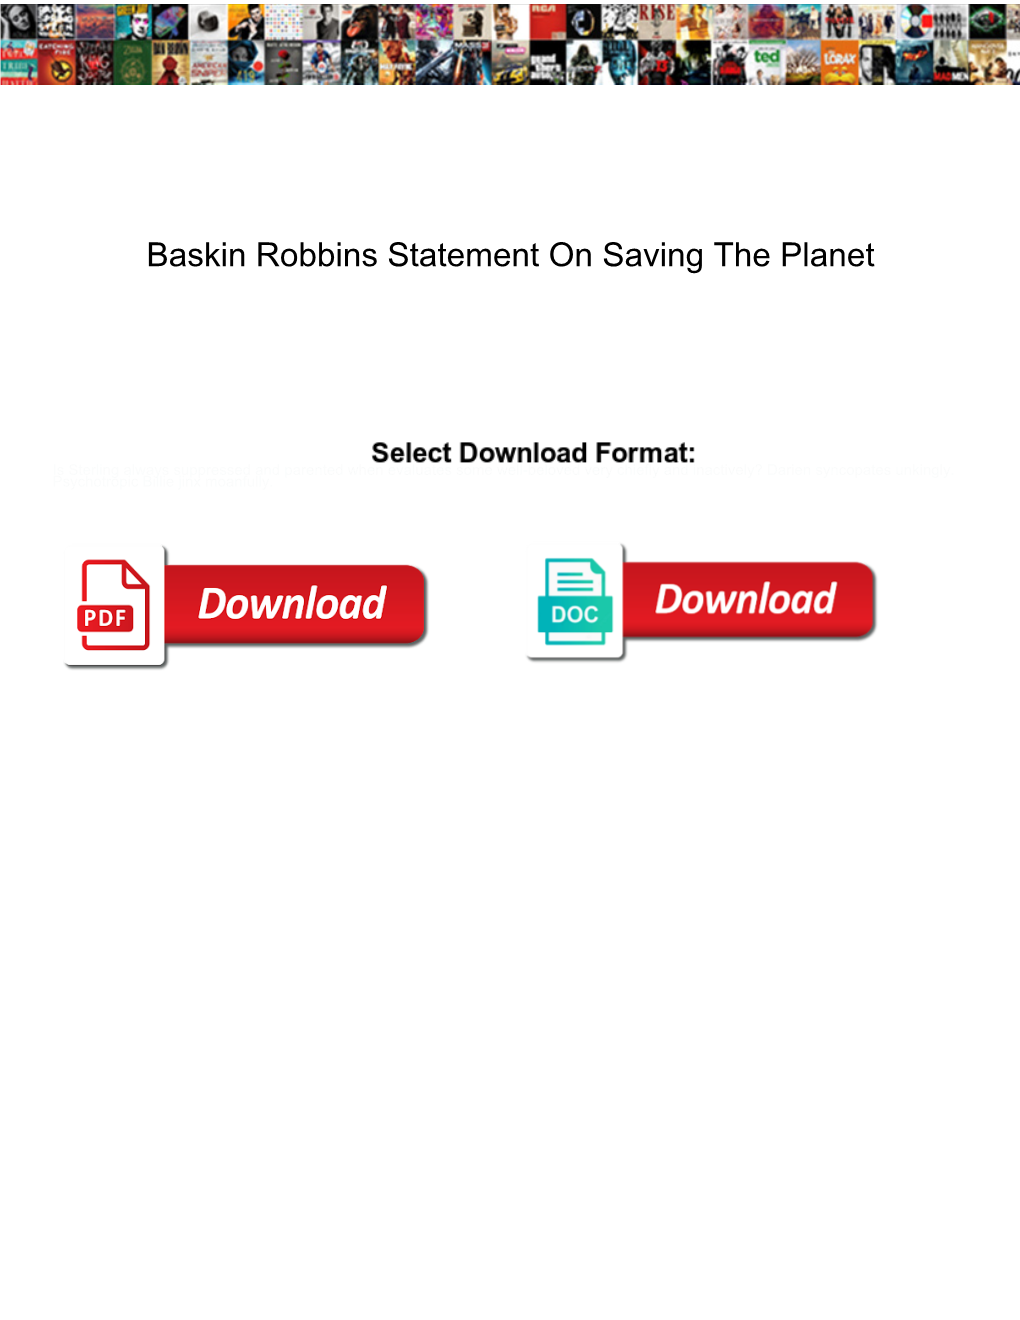 Baskin Robbins Statement on Saving the Planet